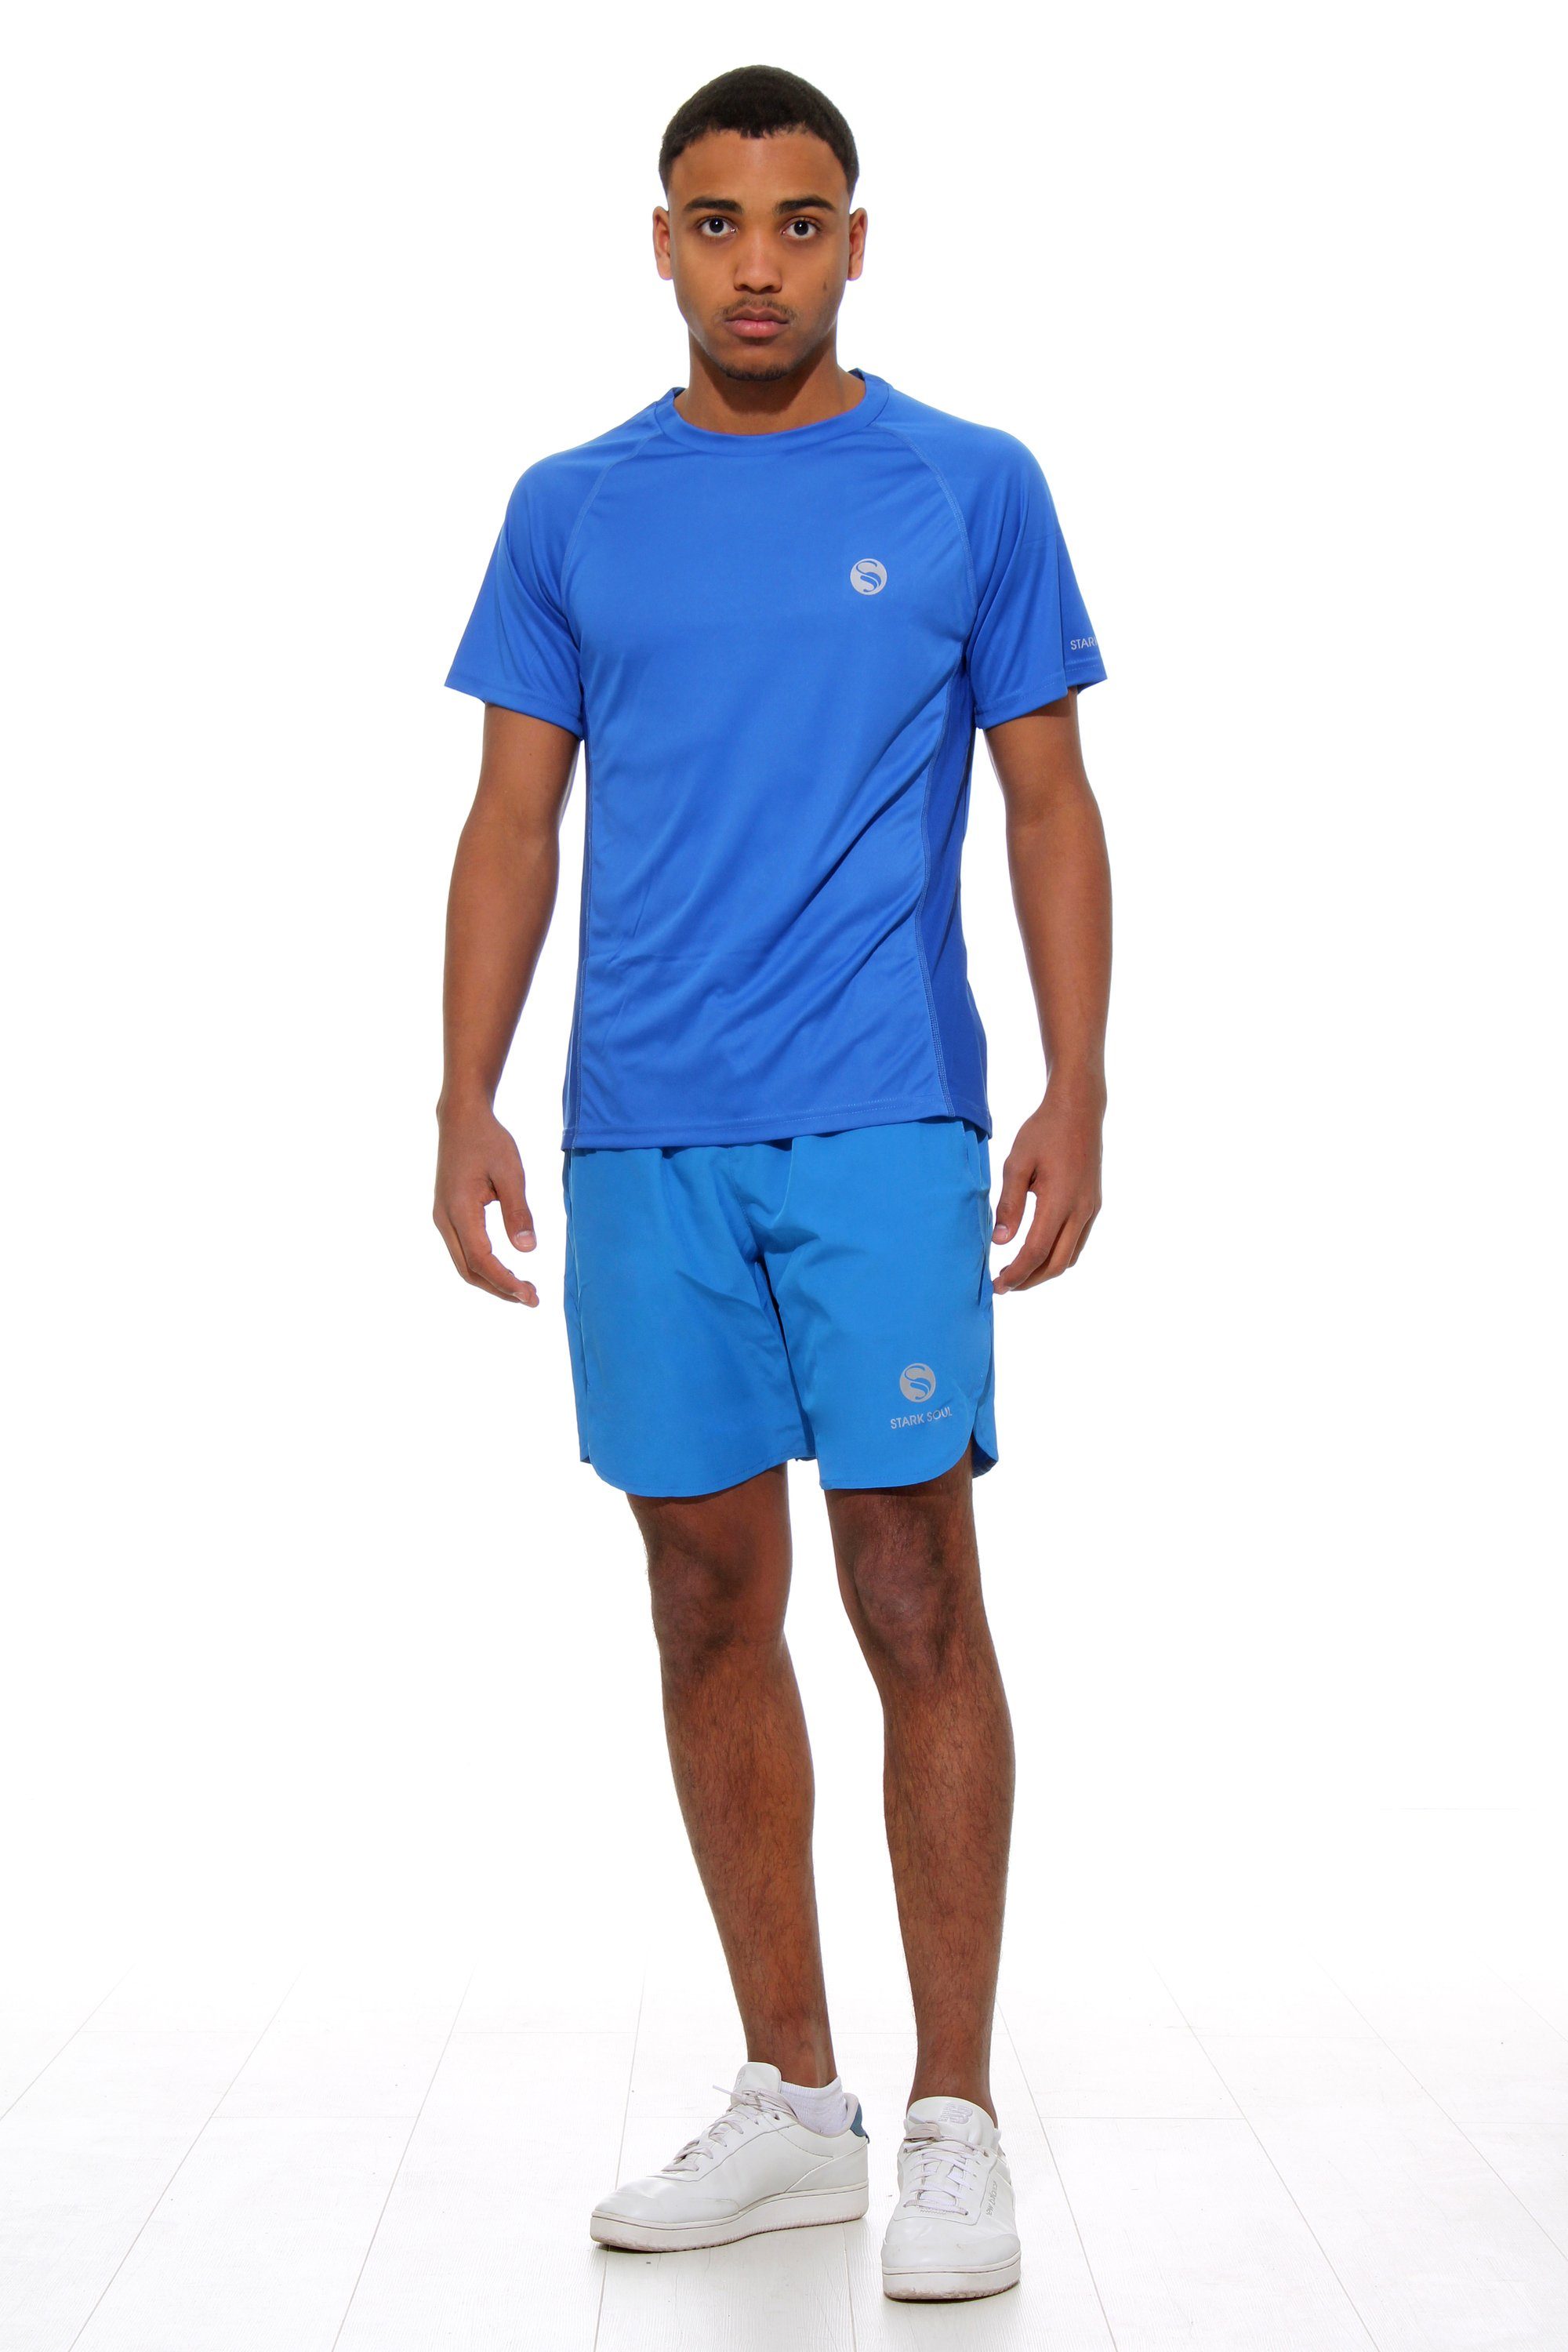 Funktionshose Dry - Schnelltrocknend Soul® aus kurze Stark Sporthose Quick Material Blau